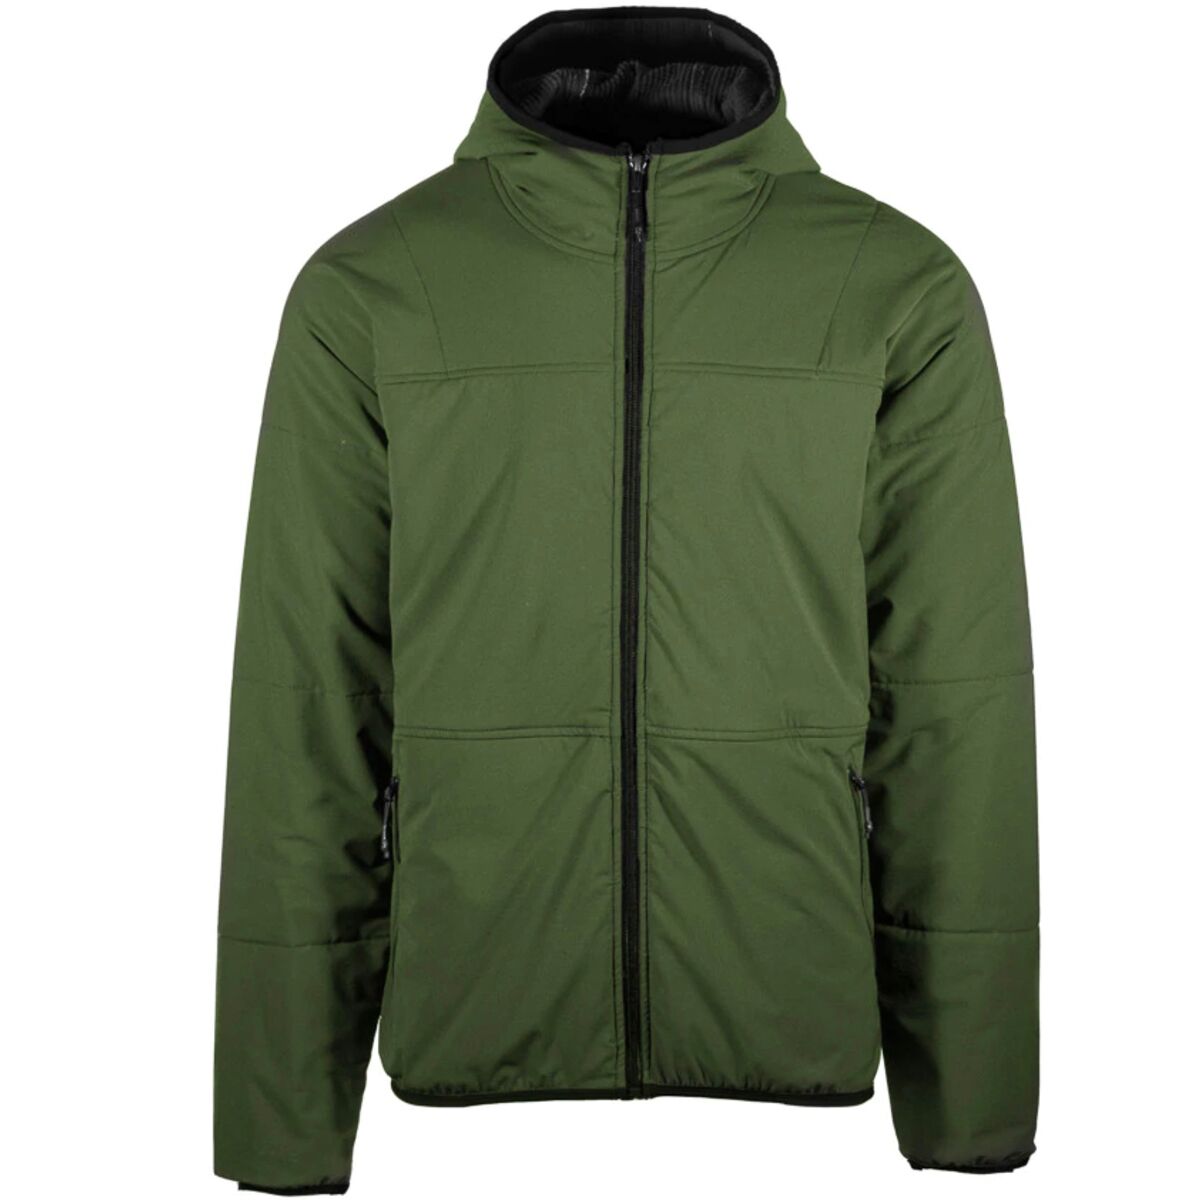 Beyond Clothing A5 Stretch Alpha Jacket - Men's Rustic Green L/Long